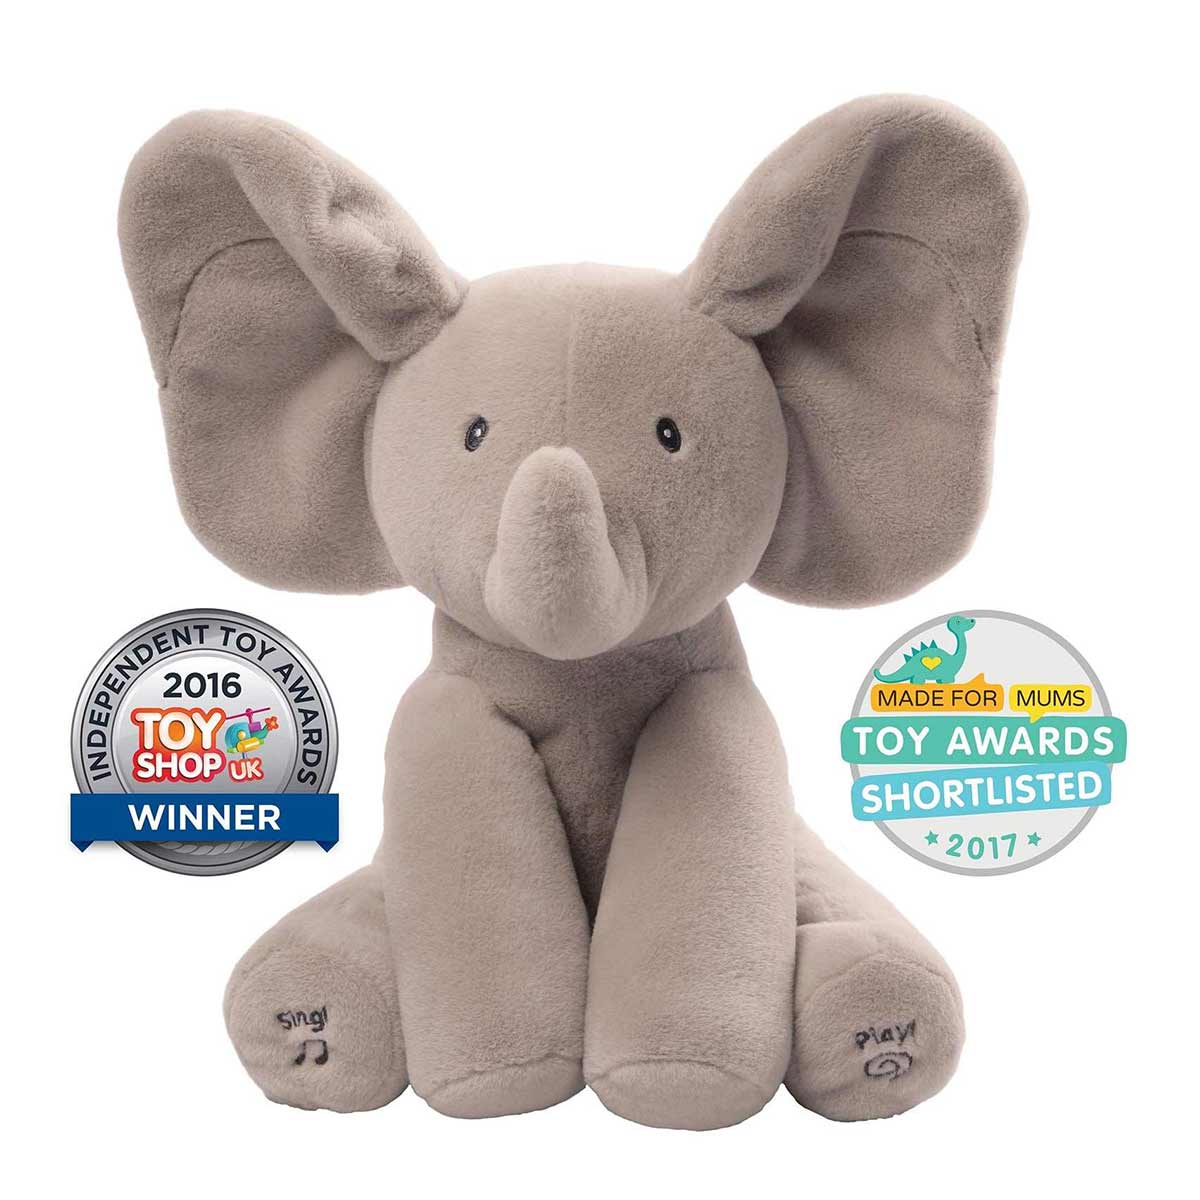 GUND Baby Flappy the Animated Elephant Soft Toy